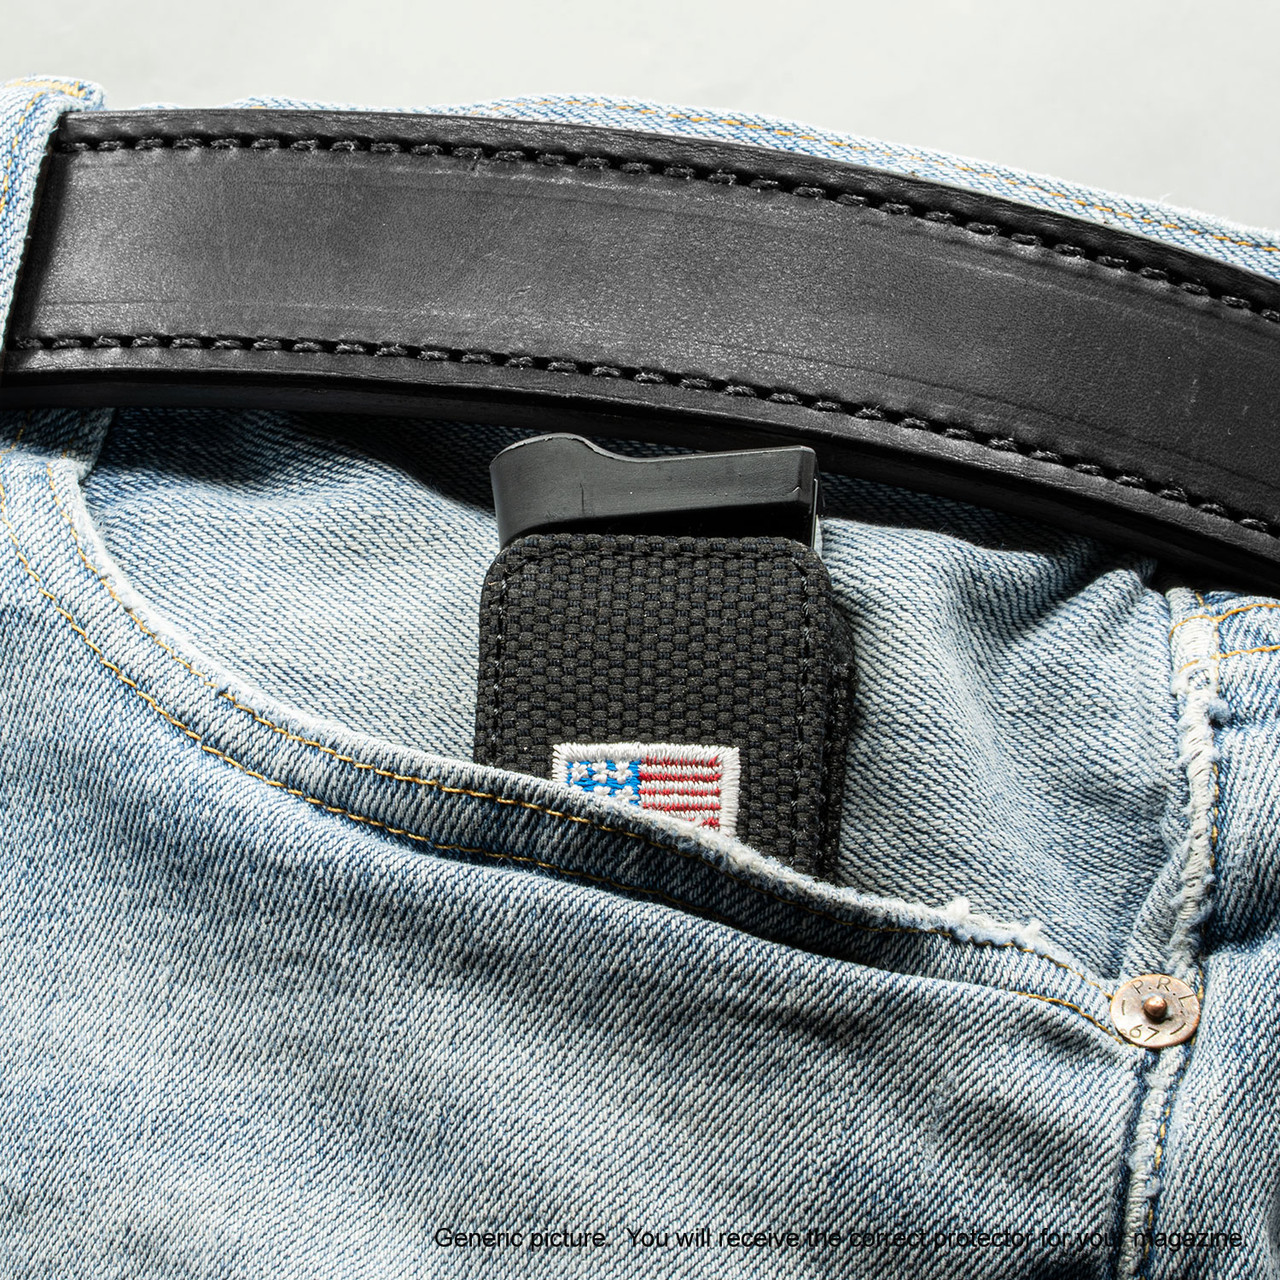 M&P Shield PLUS Black Canvas Flag Magazine Pocket Protector